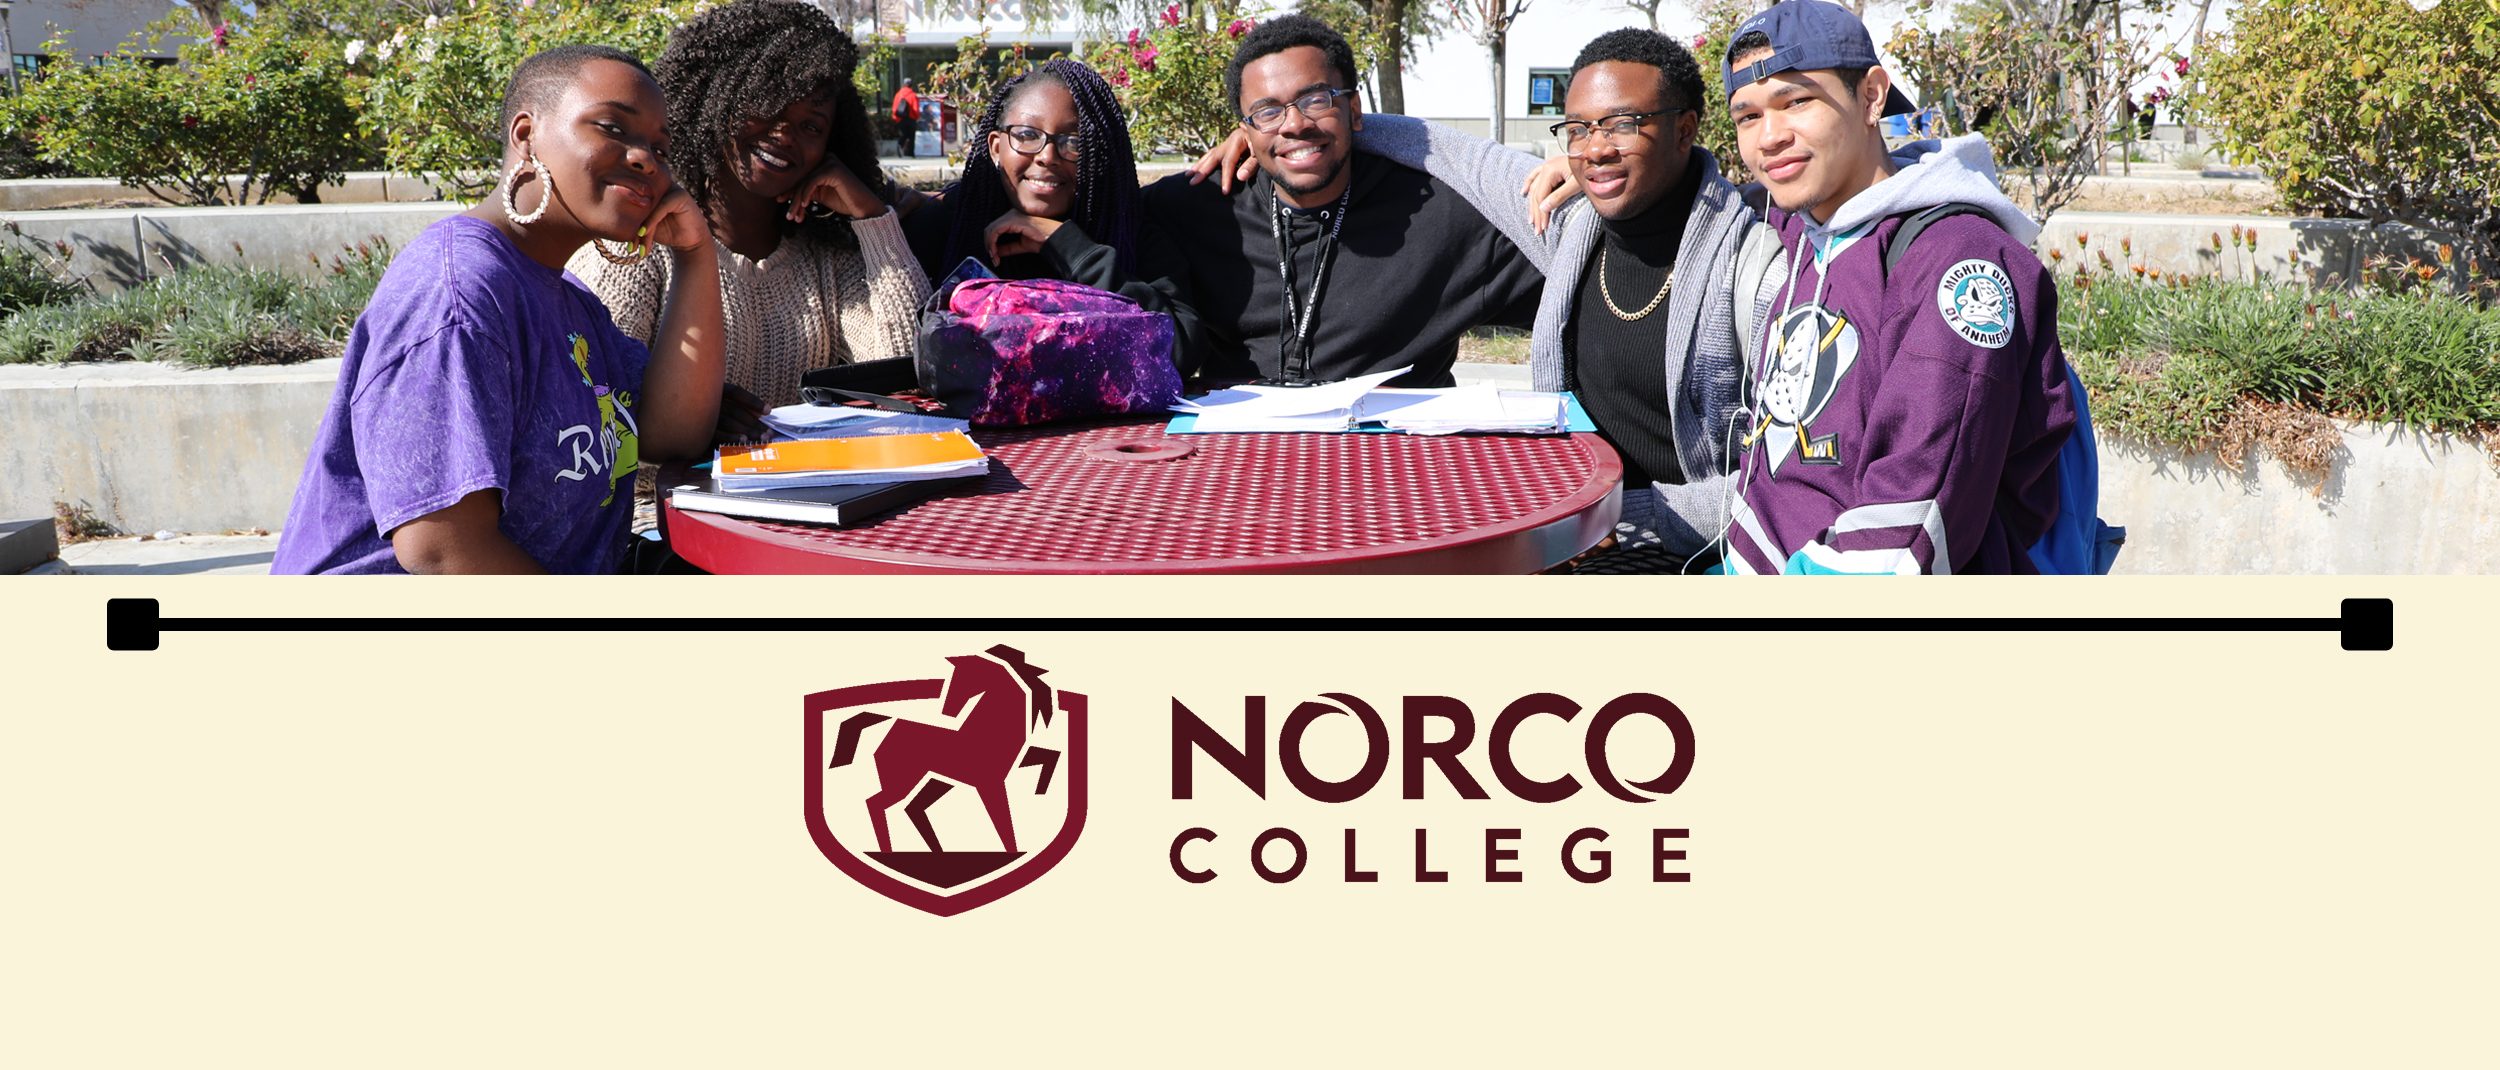 Norco College main hero image banner